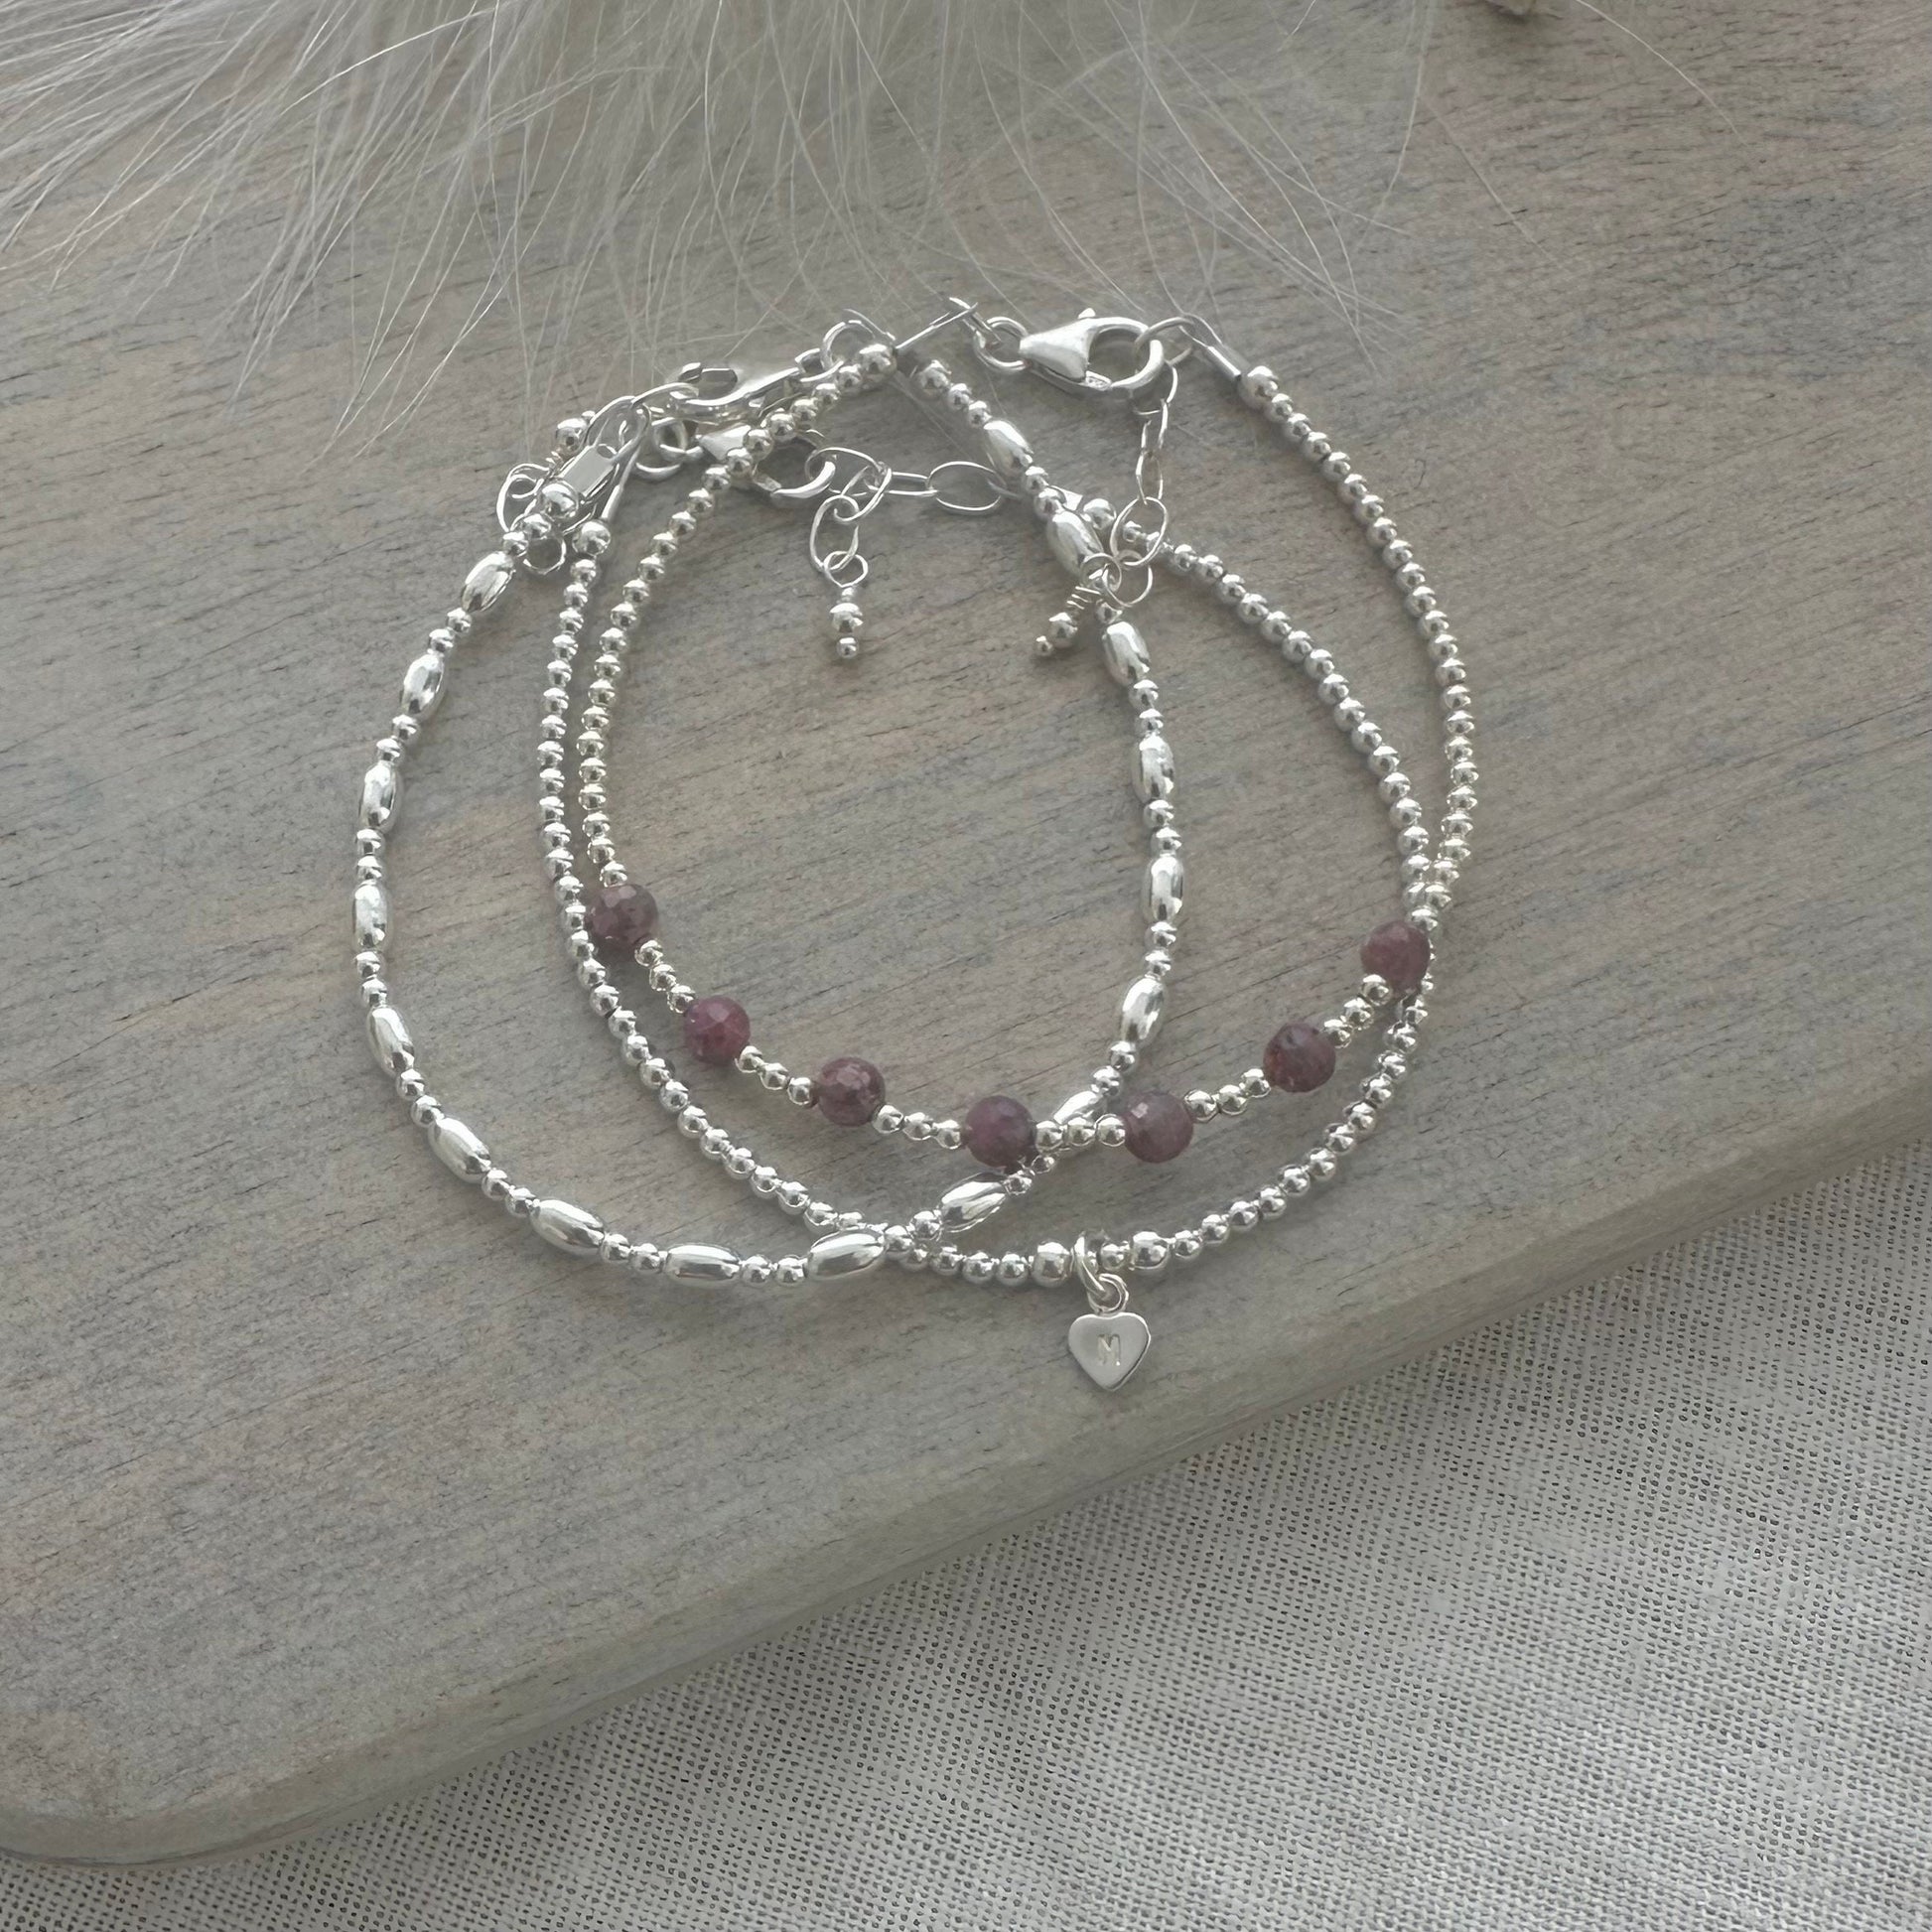 Personalised July Birthstone Ruby Bracelet Set, Dainty Sterling Silver Stacking Bracelets for Women